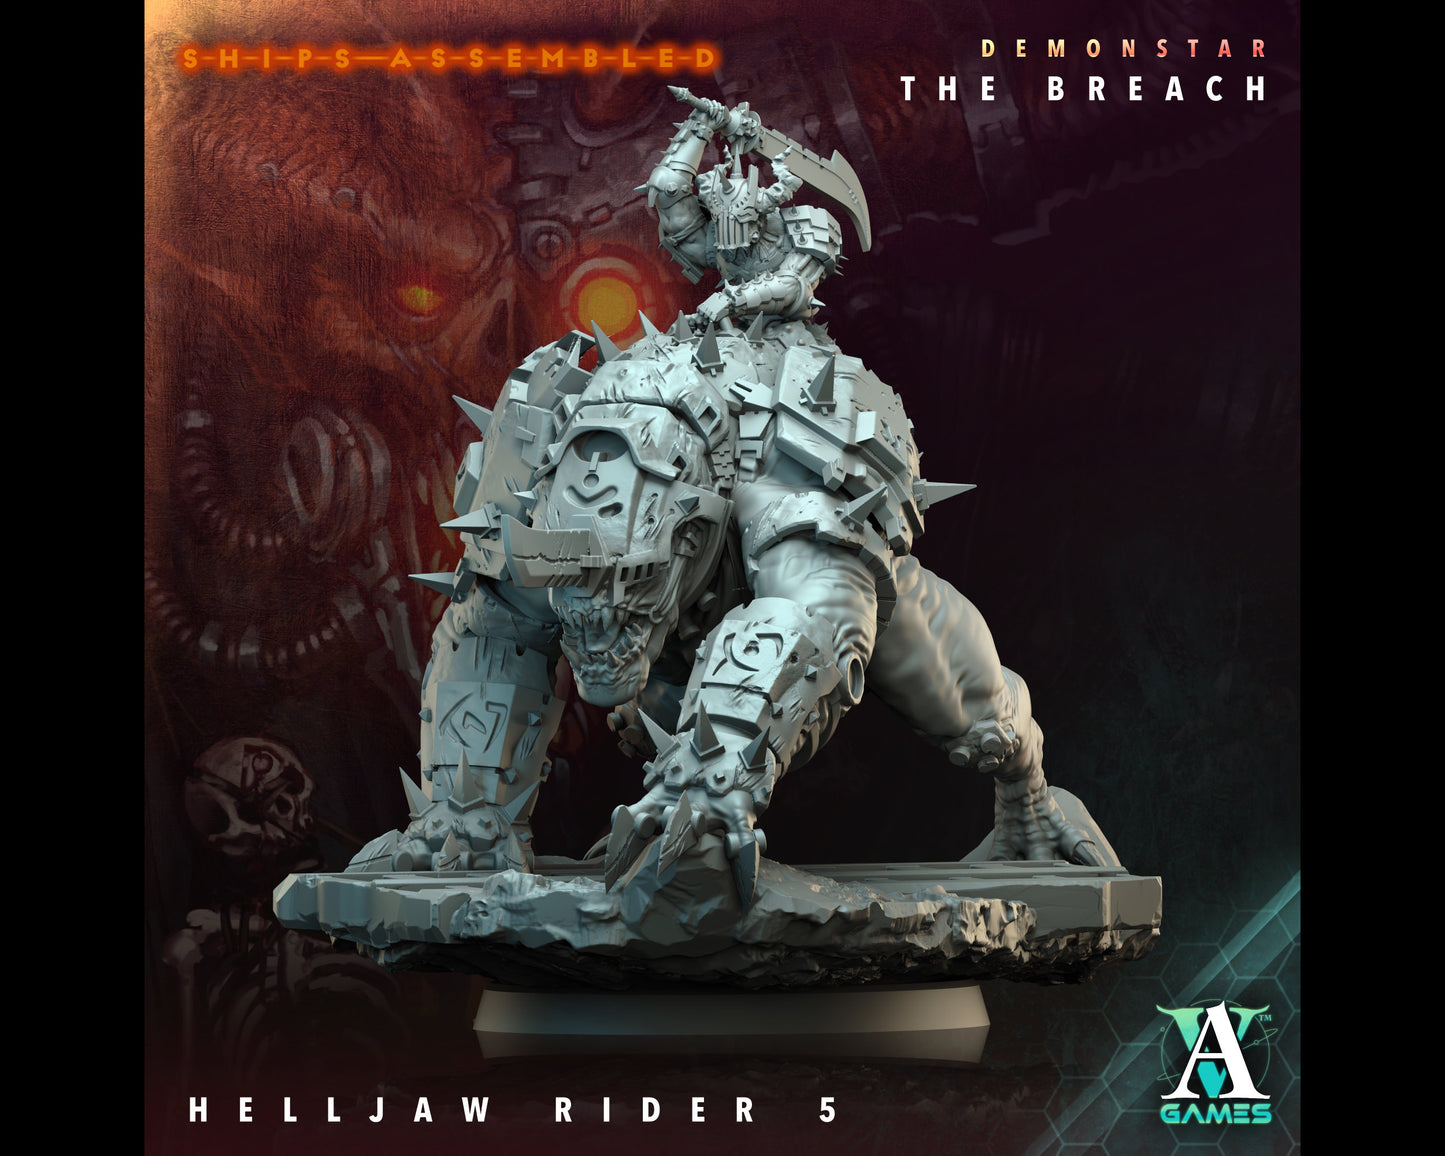 Helljaw Rider 5 - Demonstar: The Breach - Highly Detailed Resin 8k 3D Printed Miniature